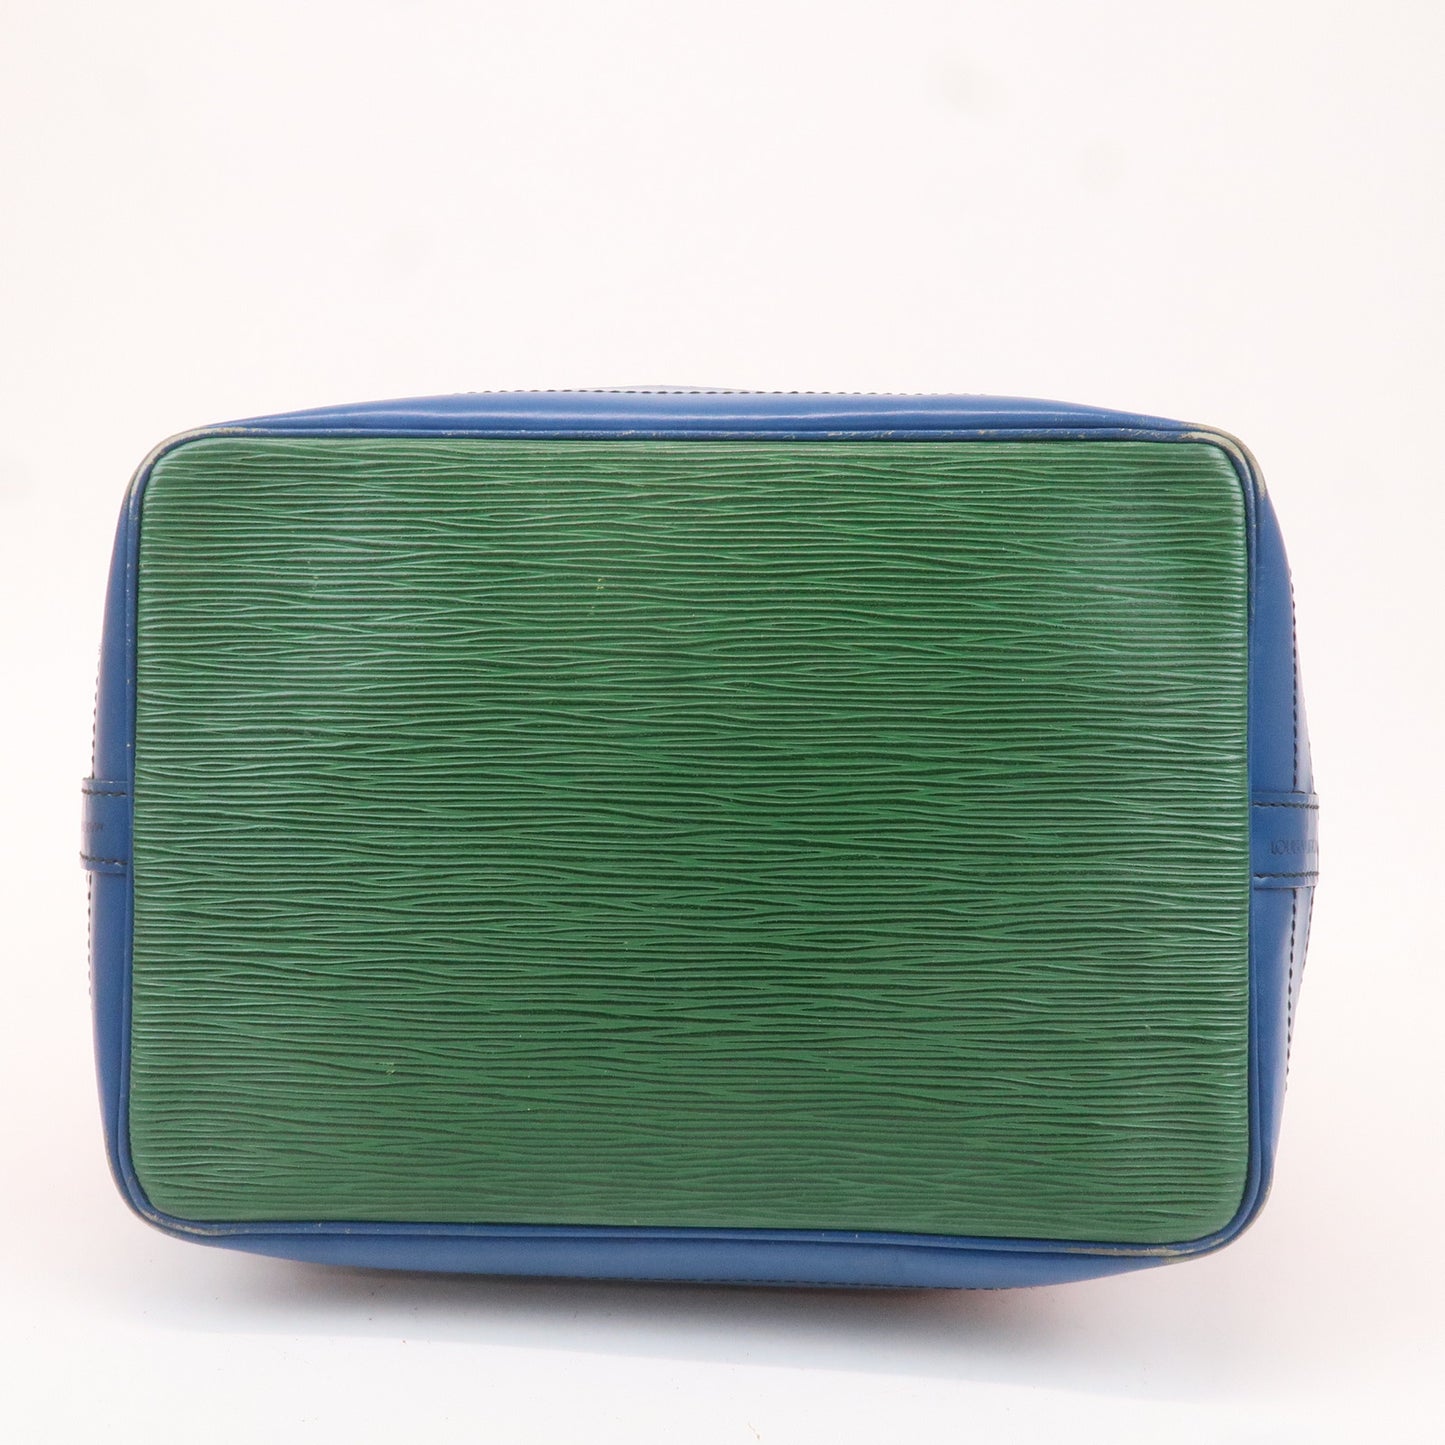 Louis Vuitton Epi Noe Shoulder Bag Red Blue Green M44084